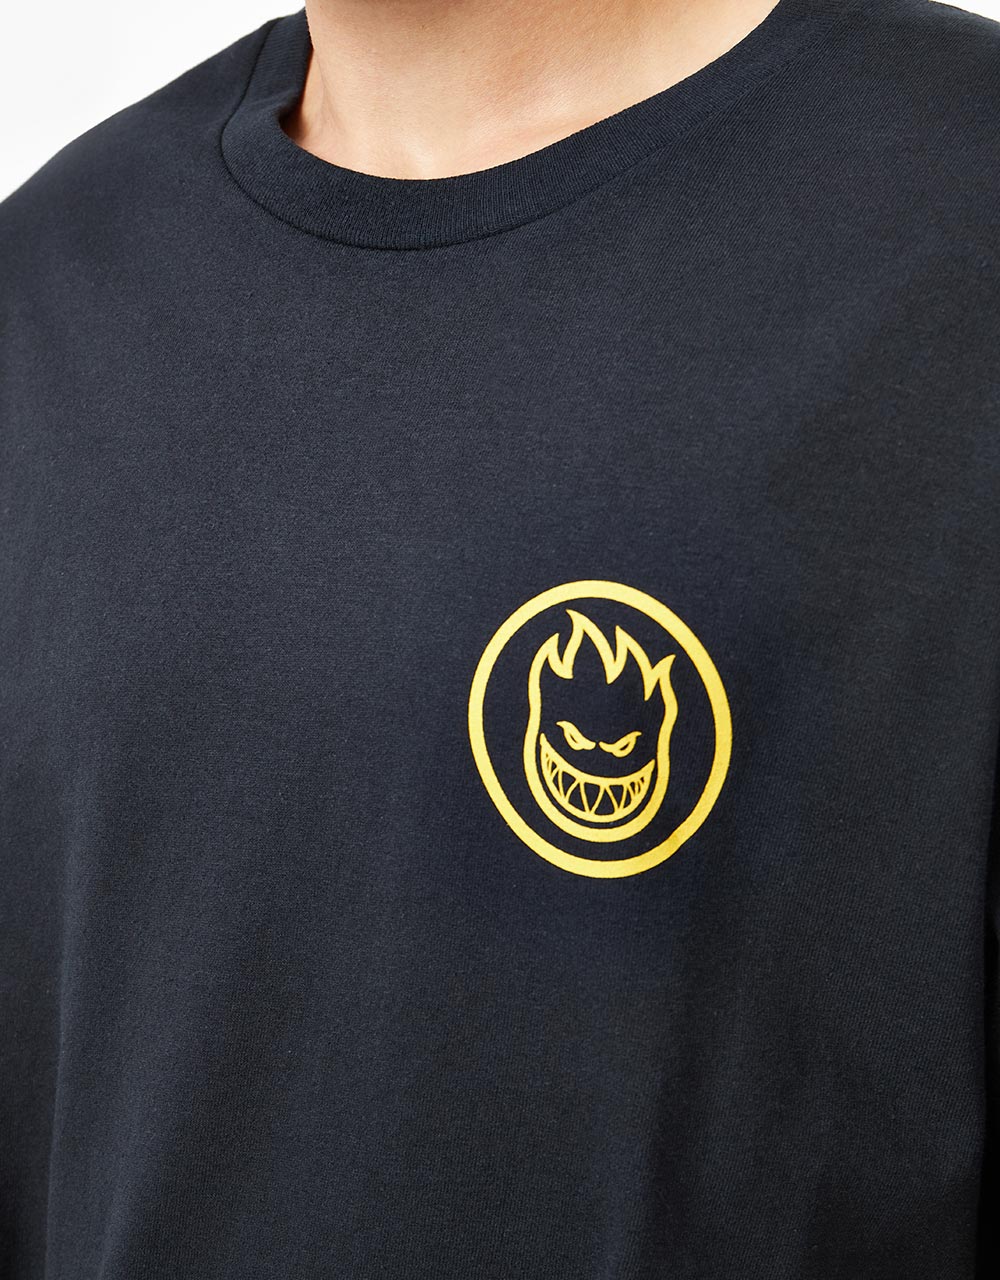 Spitfire Classic Swirl T-Shirt - Black/Gold